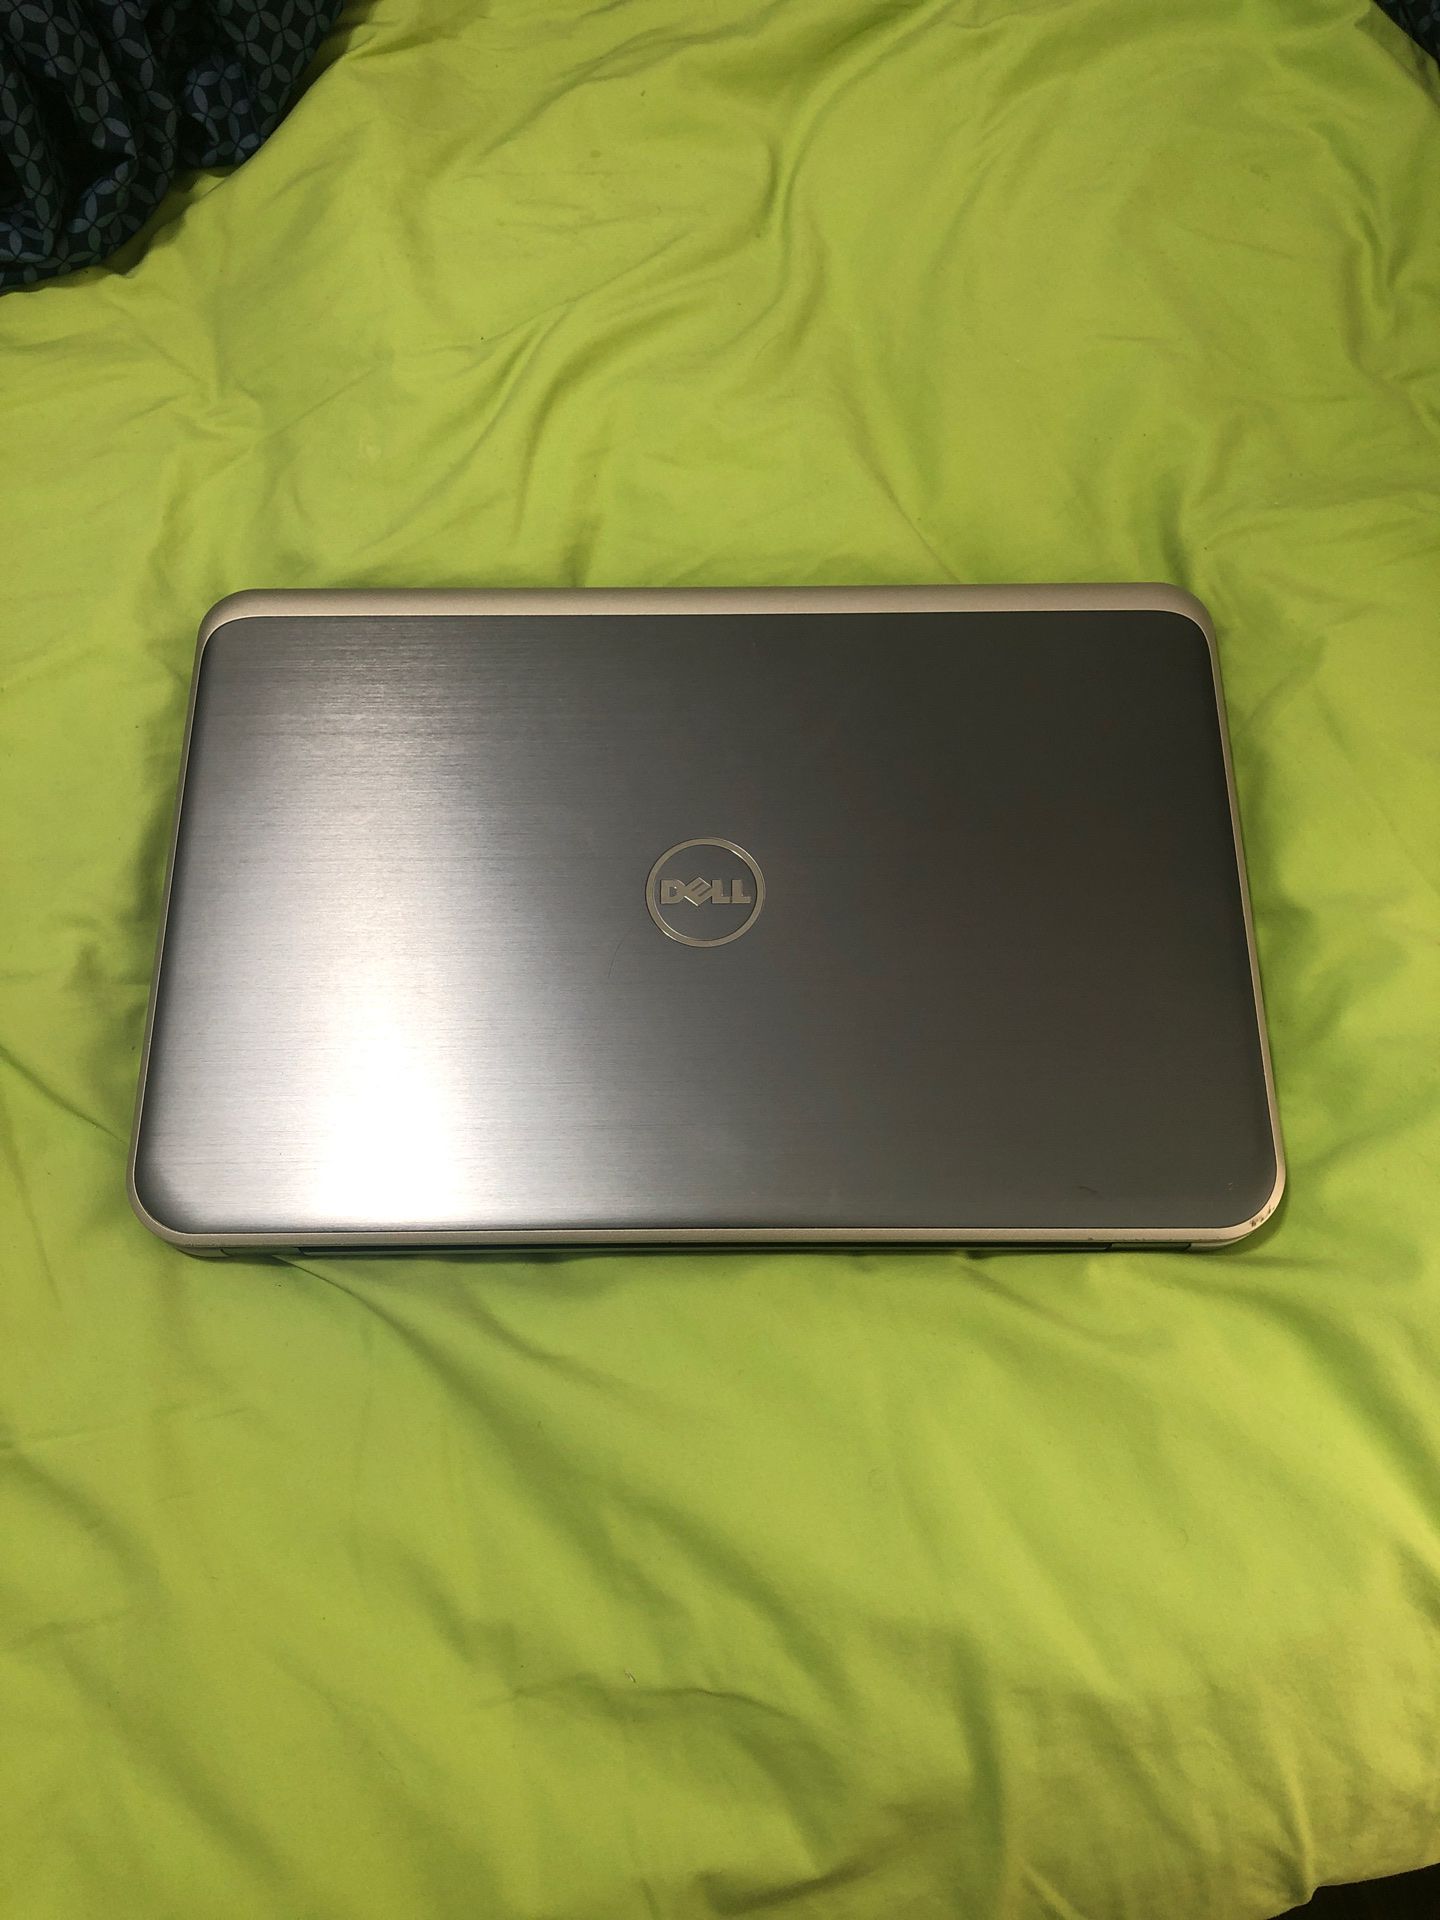 Dell Inspiron 17.3” Laptop